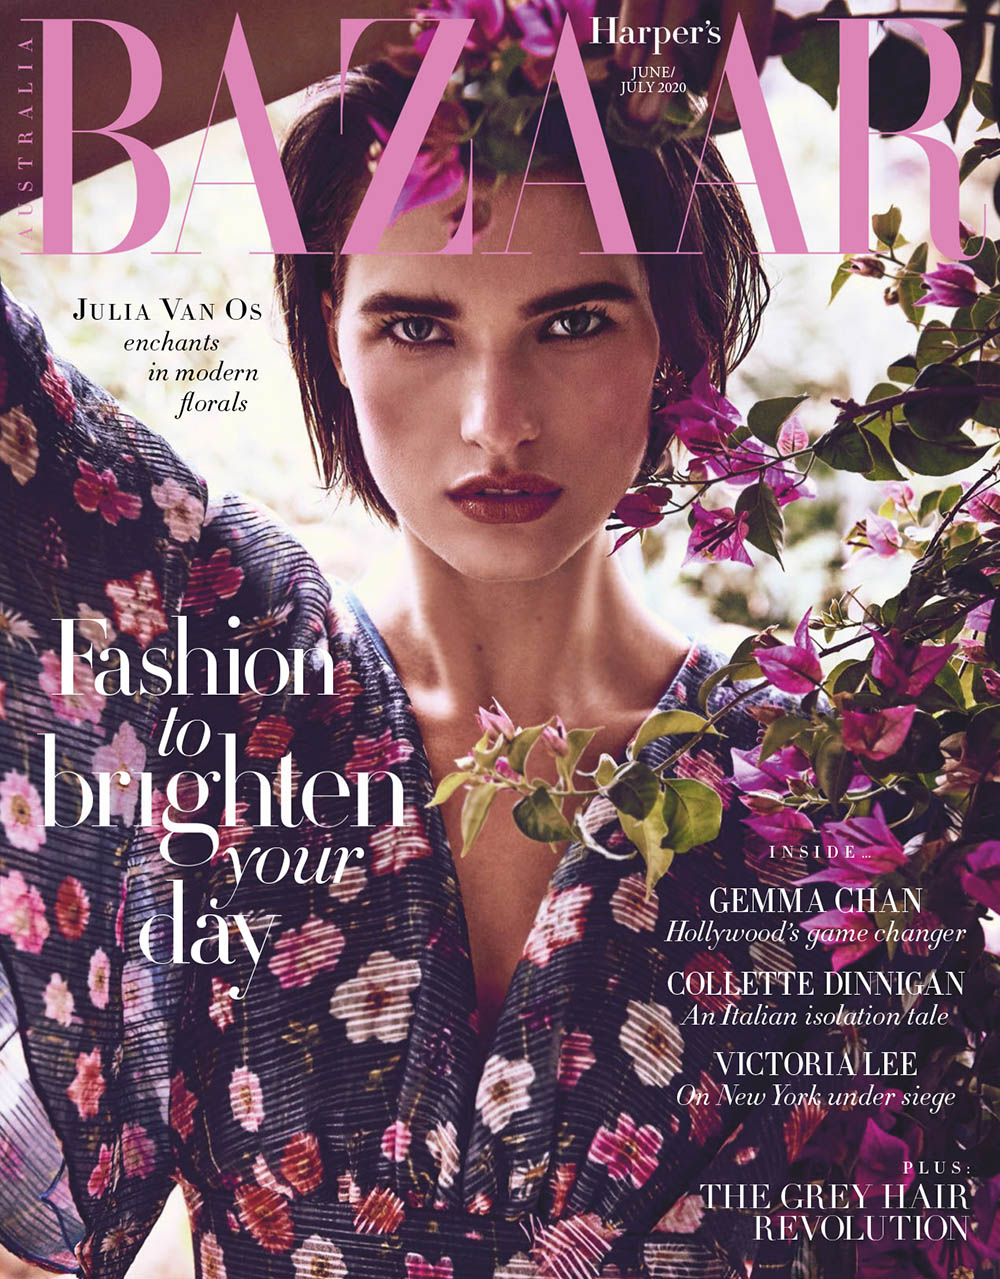 Julia van Os covers Harper’s Bazaar Australia June July 2020 by Regan Cameron